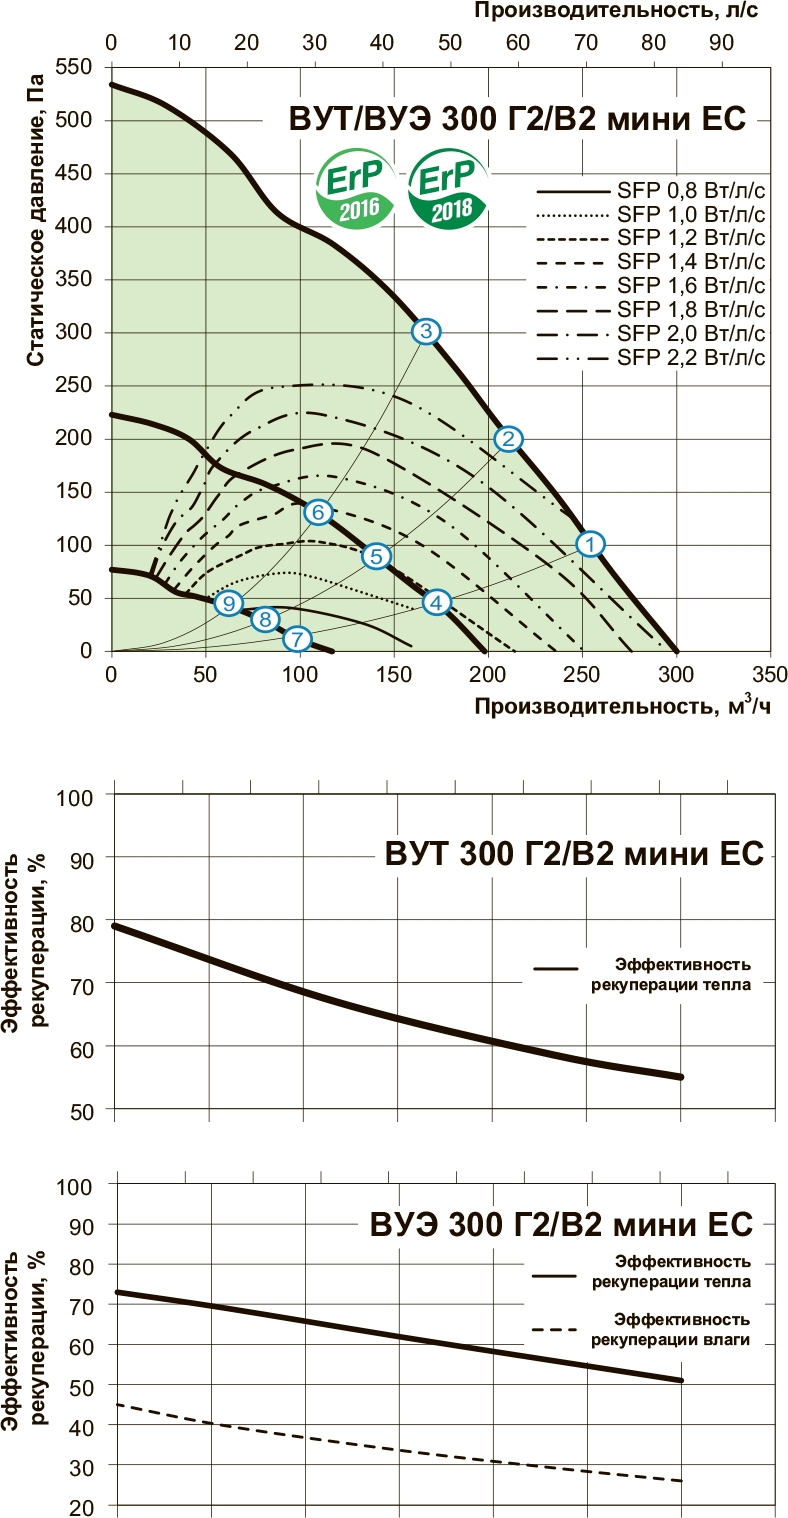 Вентс ВУЕ 300 В2 мини ЕС А14 Діаграма продуктивності